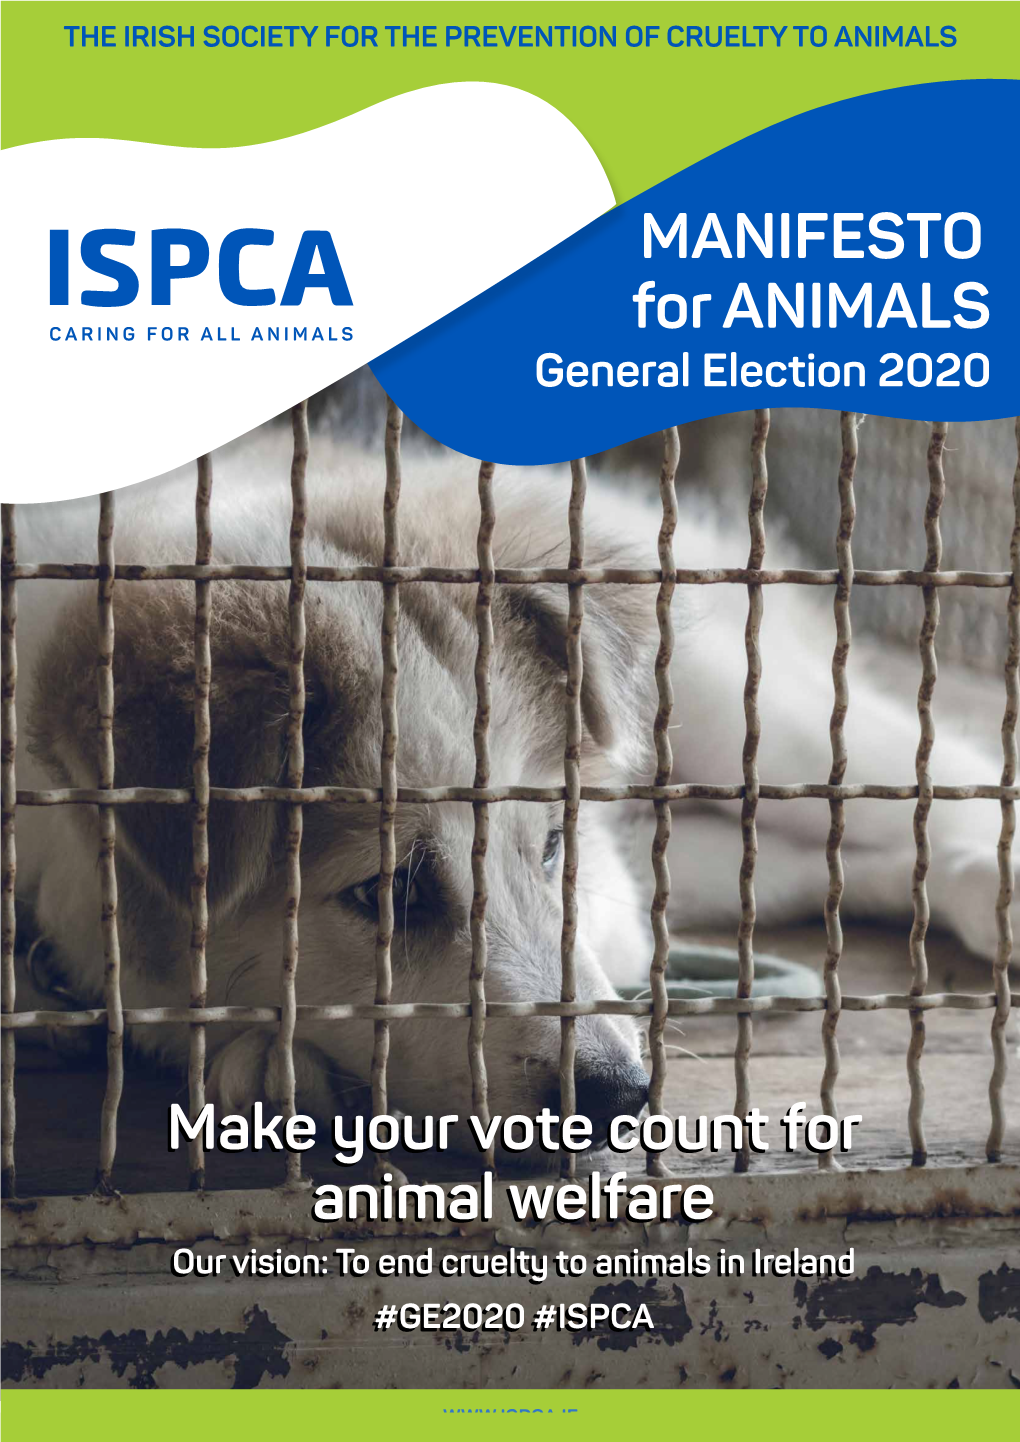 MANIFESTO for ANIMALS General Election 2020